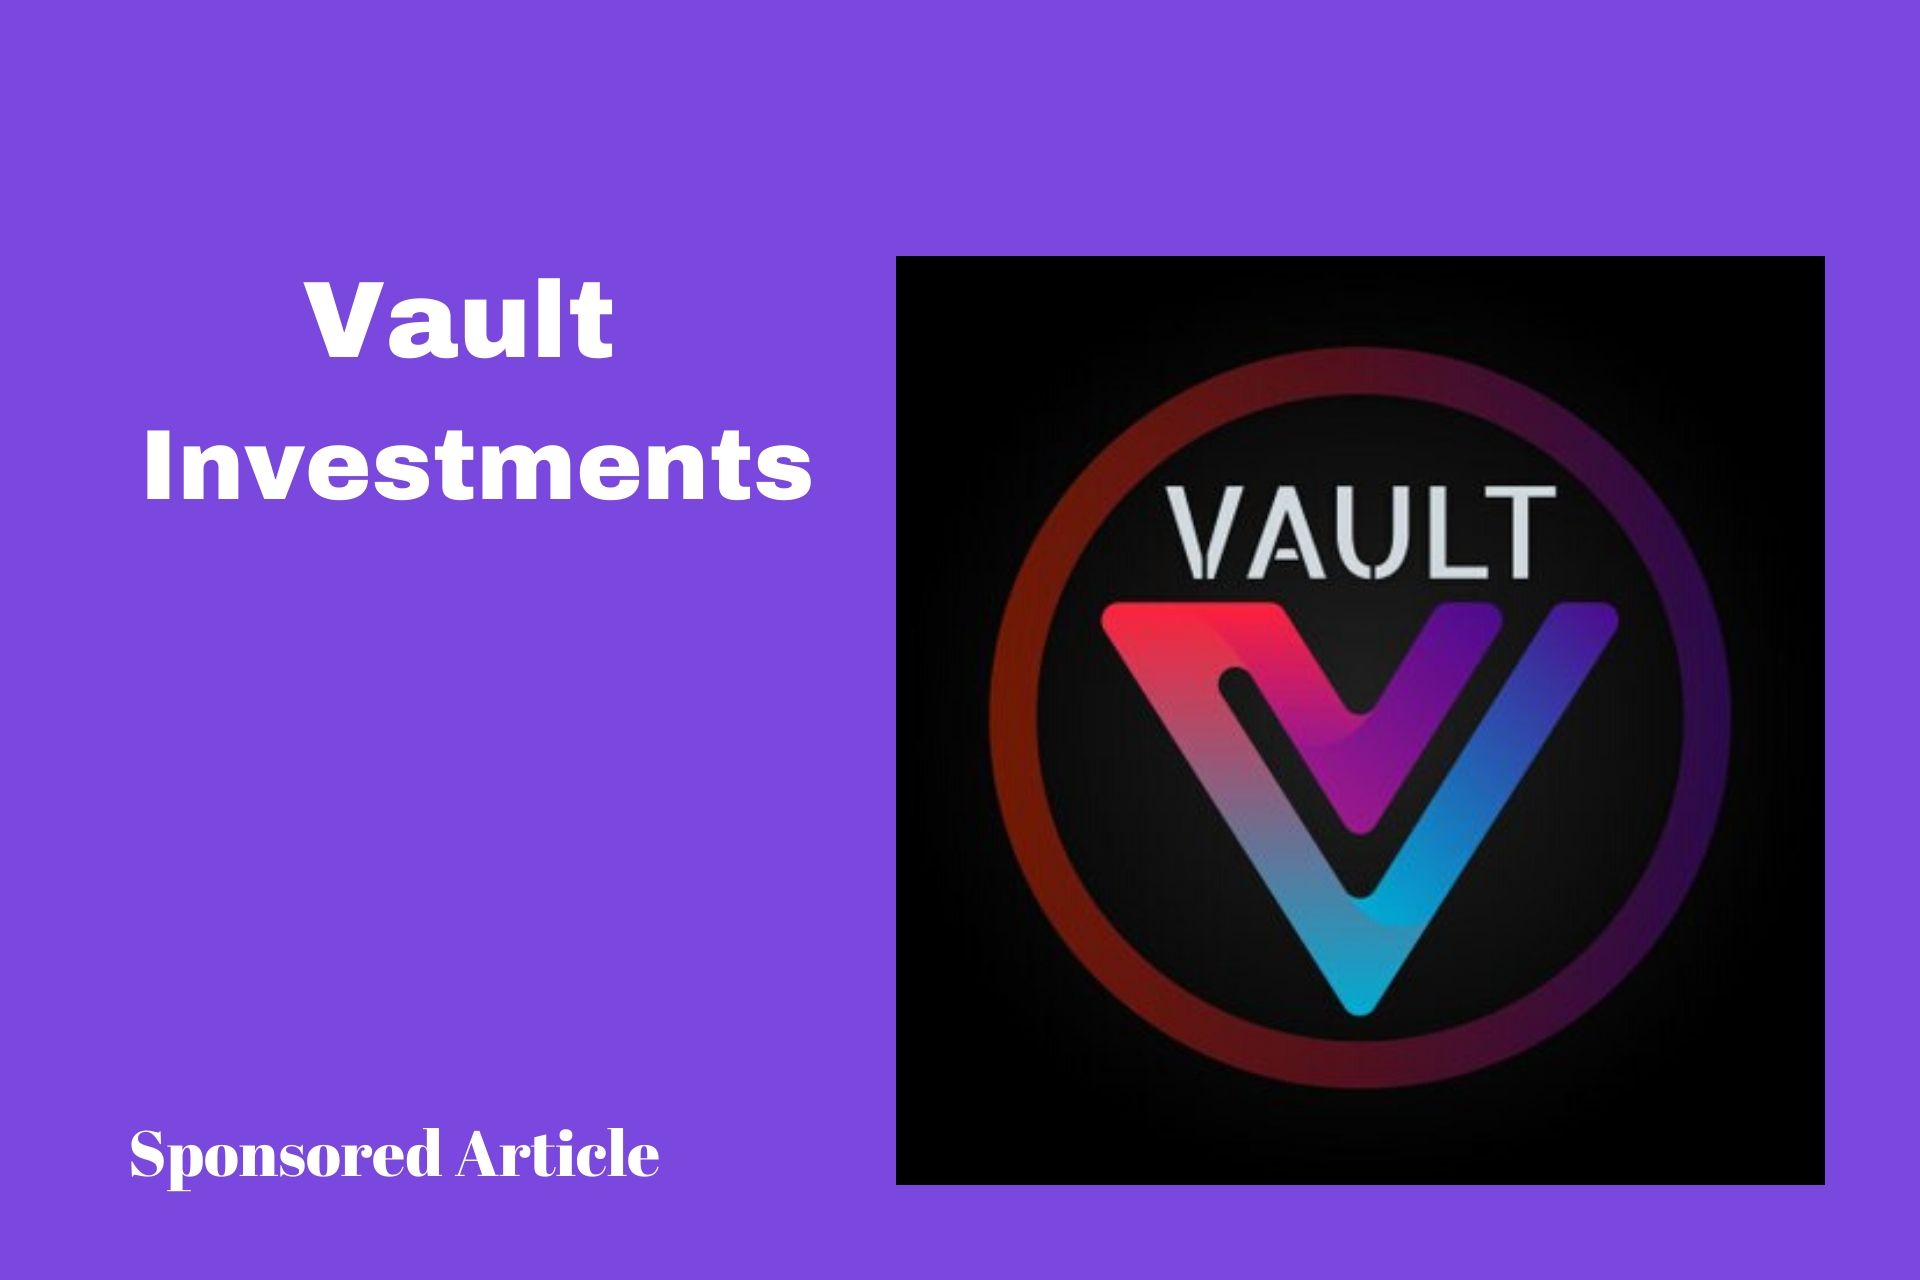 VAULT Investments